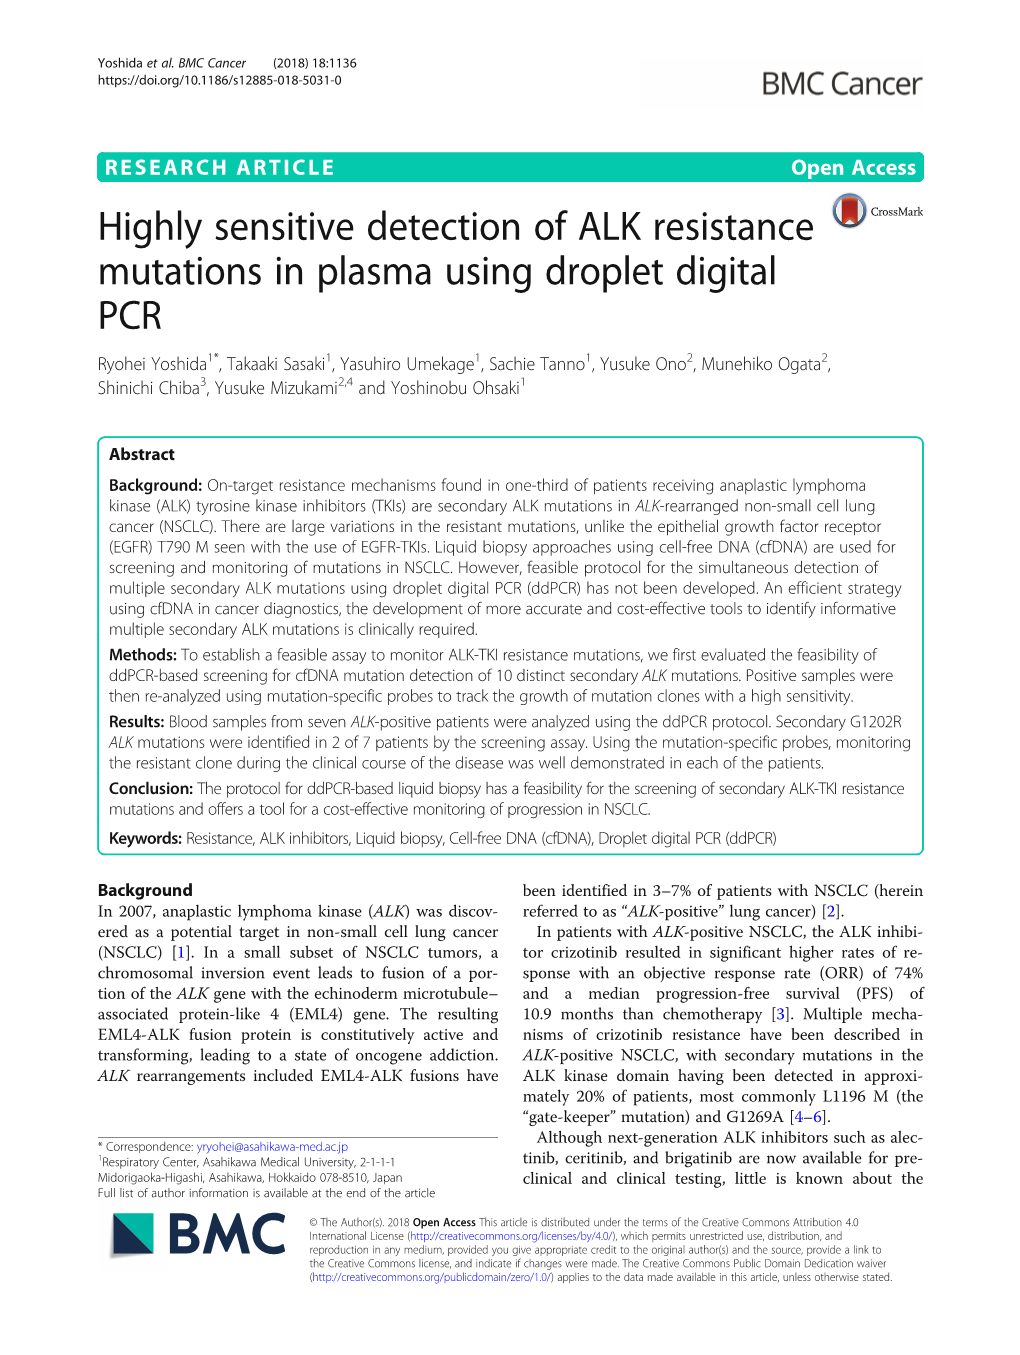 Highly Sensitive Detection of ALK Resistance Mutations in Plasma